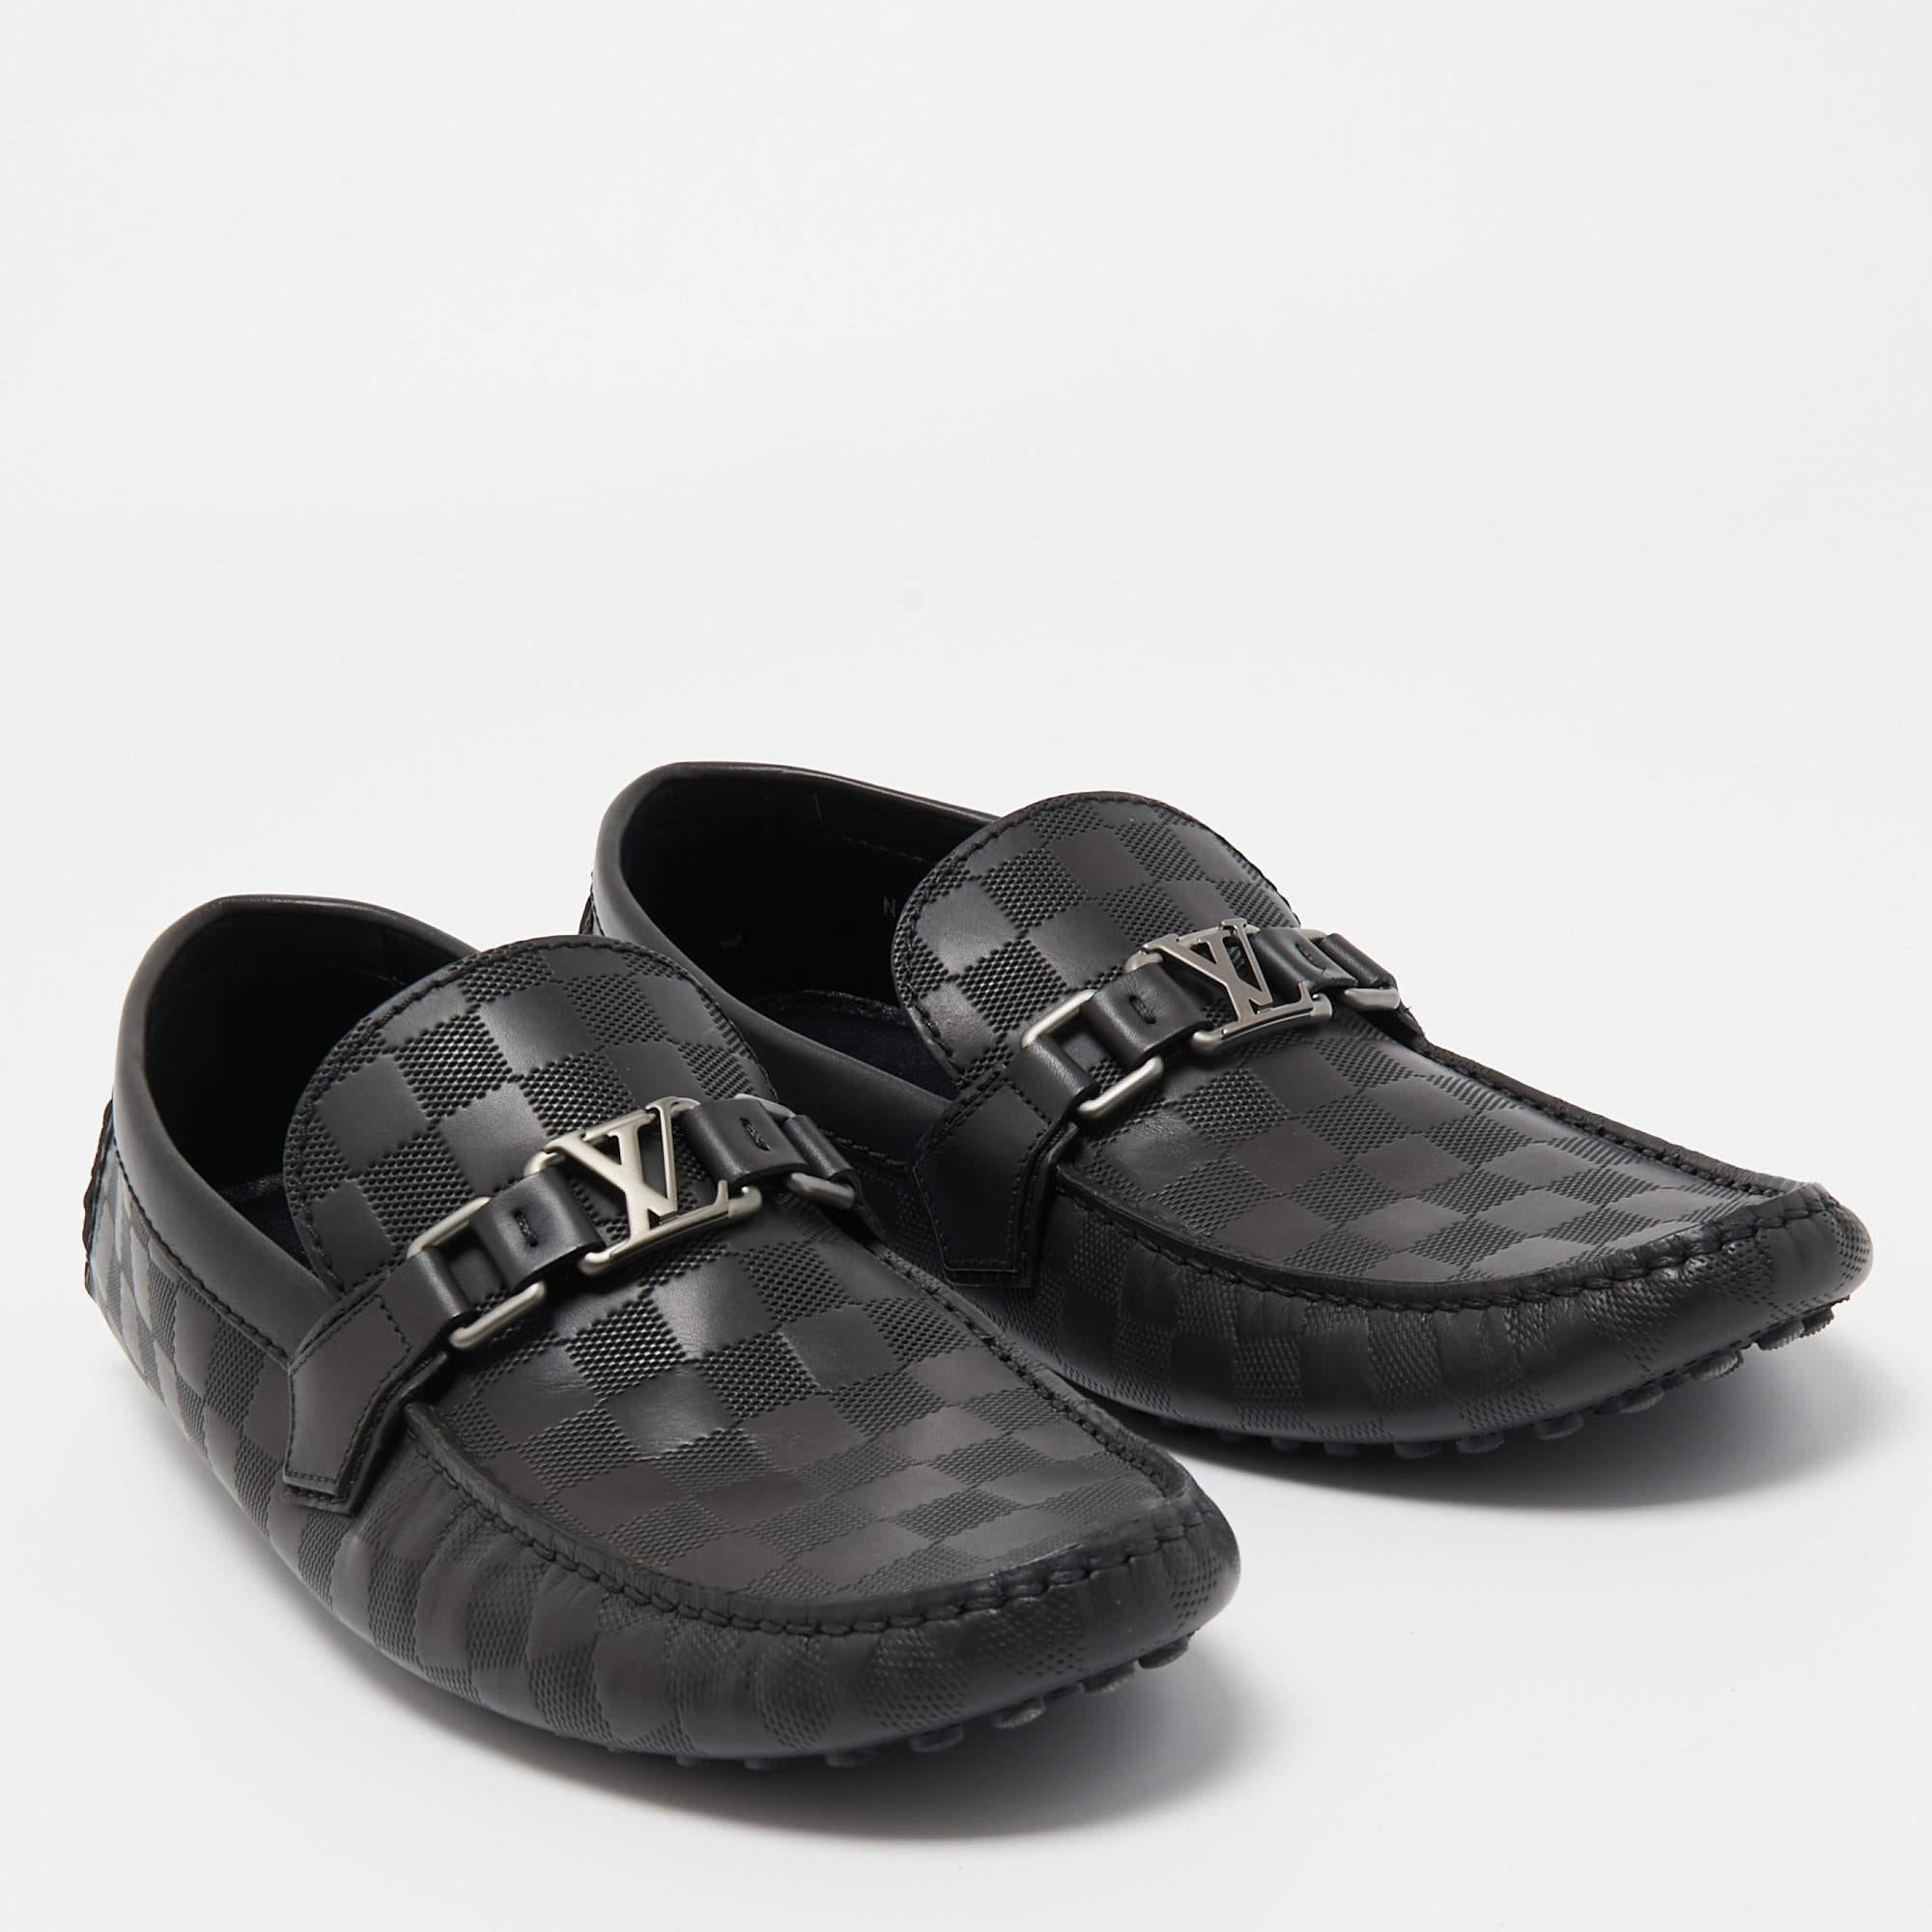 Louis Vuitton Black Damier Graphite Leather Driver Loafers Size 44 1